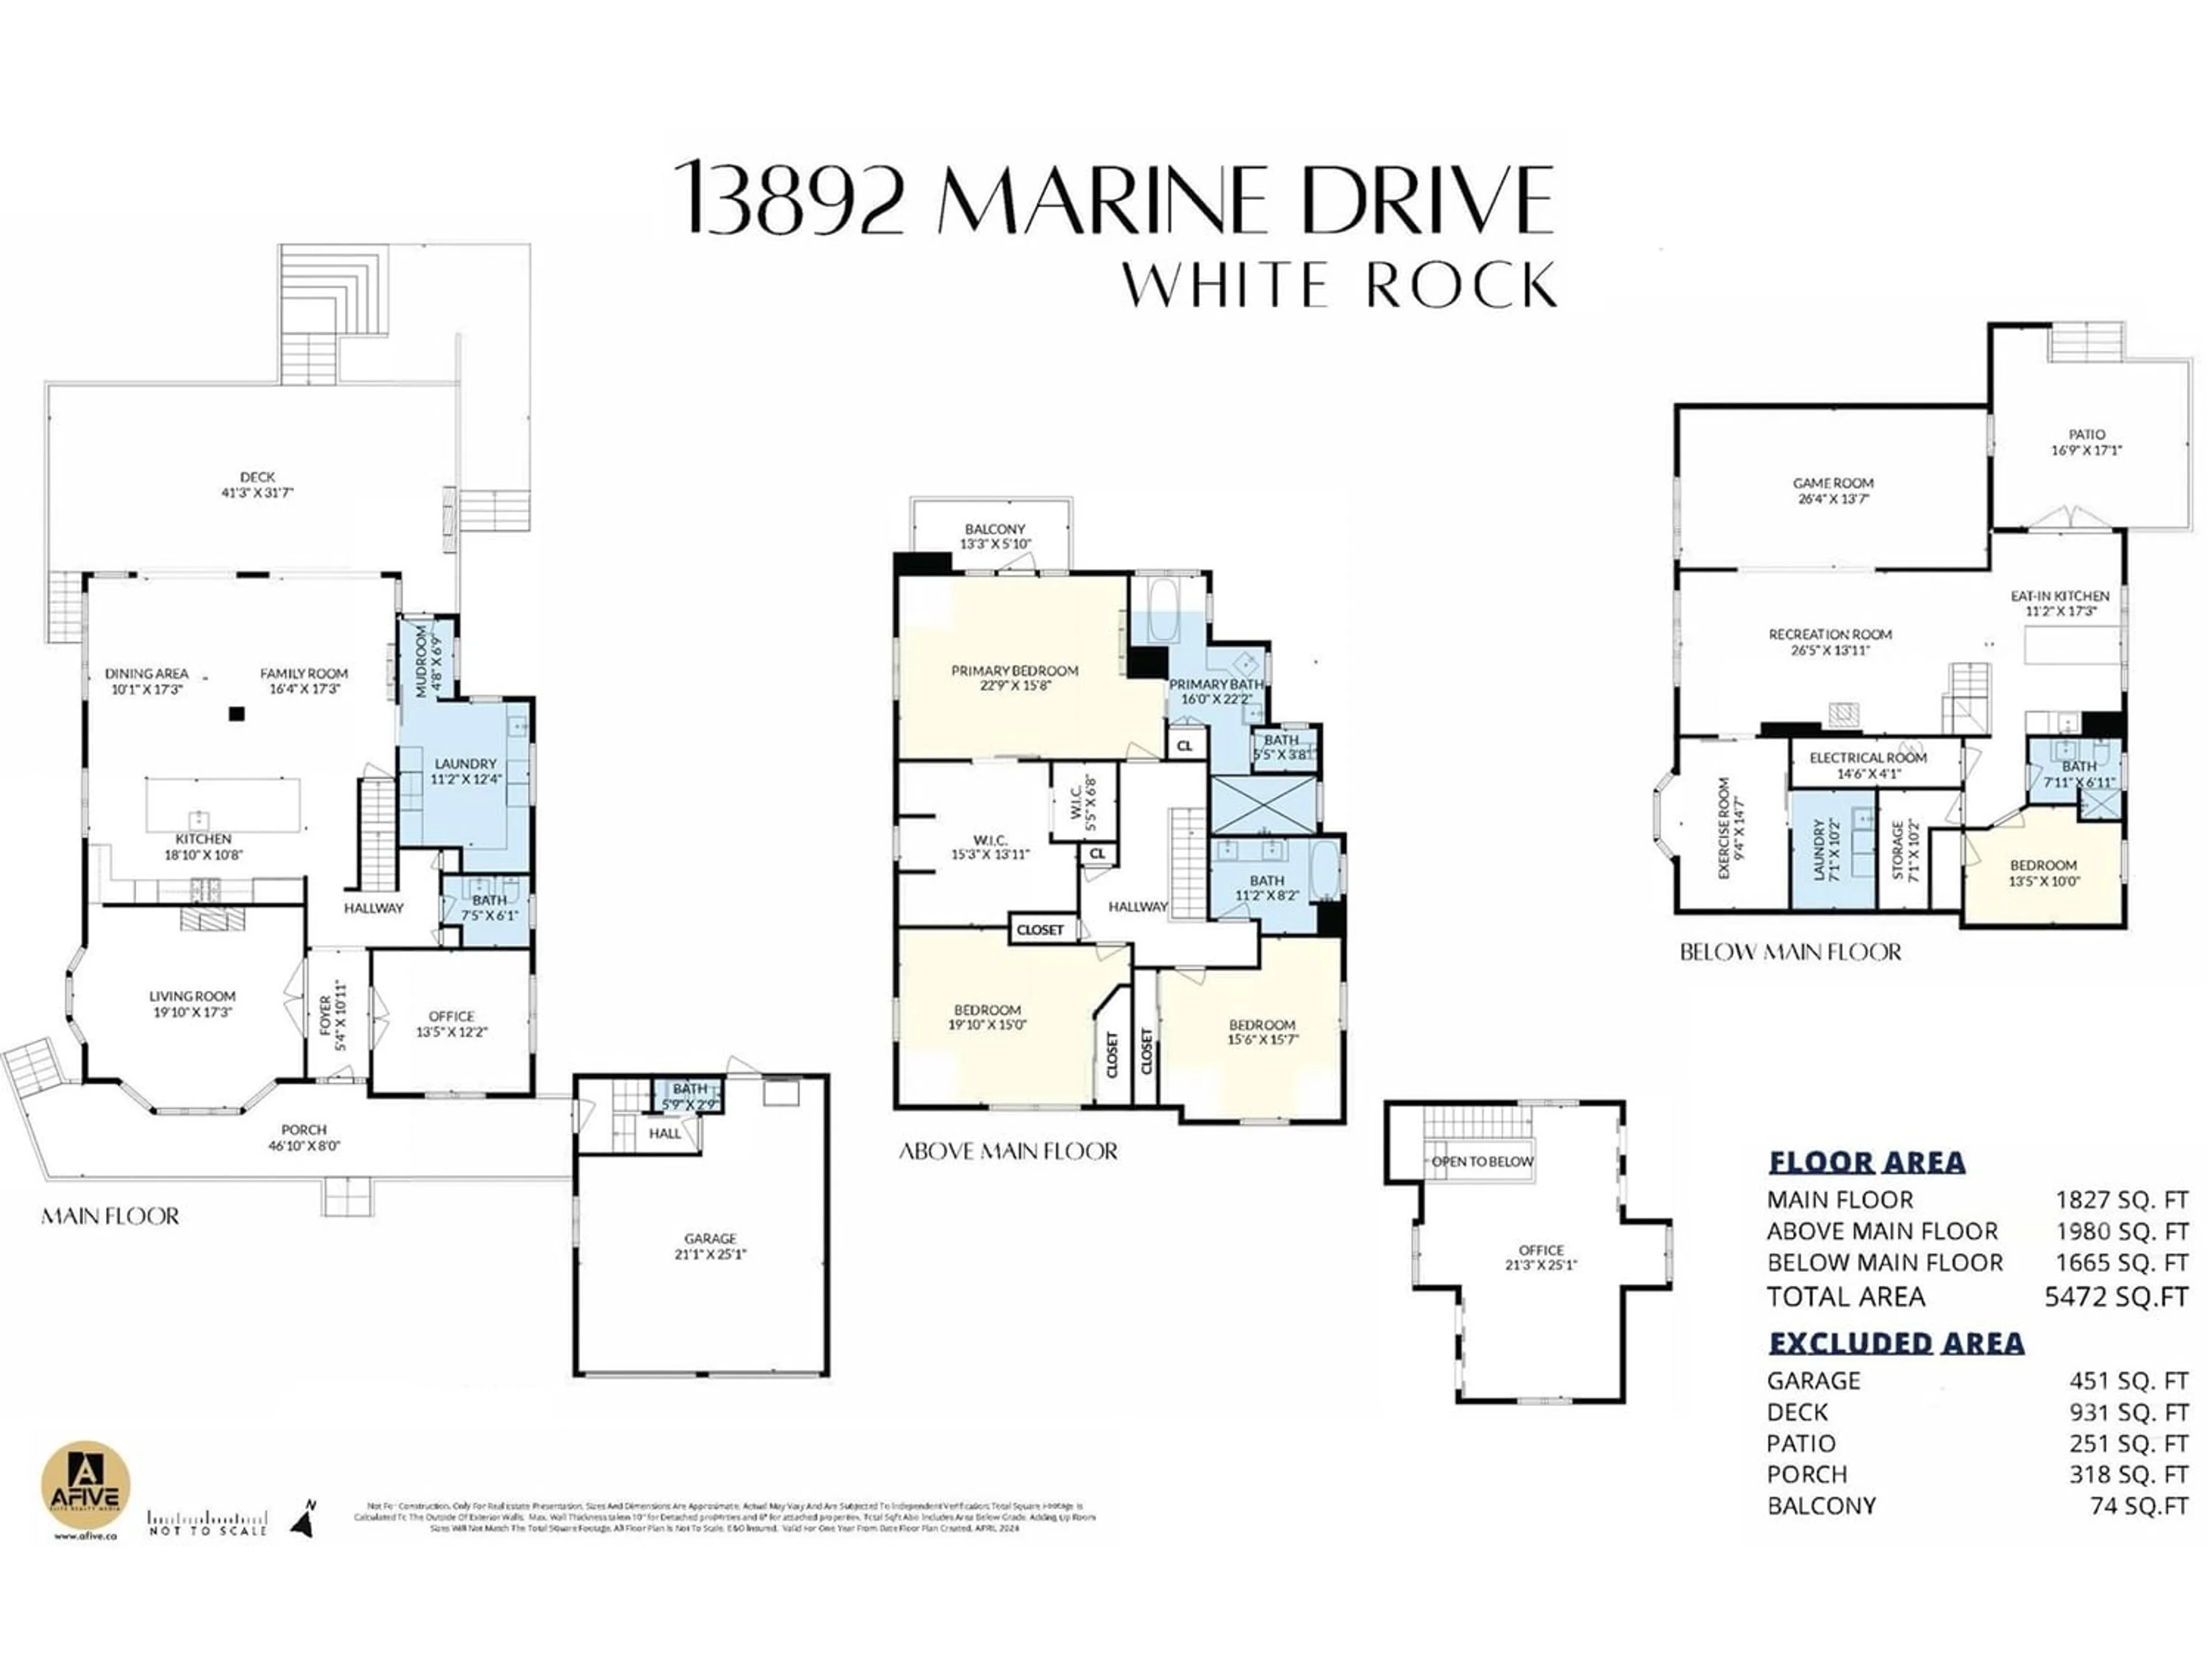 Floor plan for 13892 MARINE DRIVE, White Rock British Columbia V4B1A4